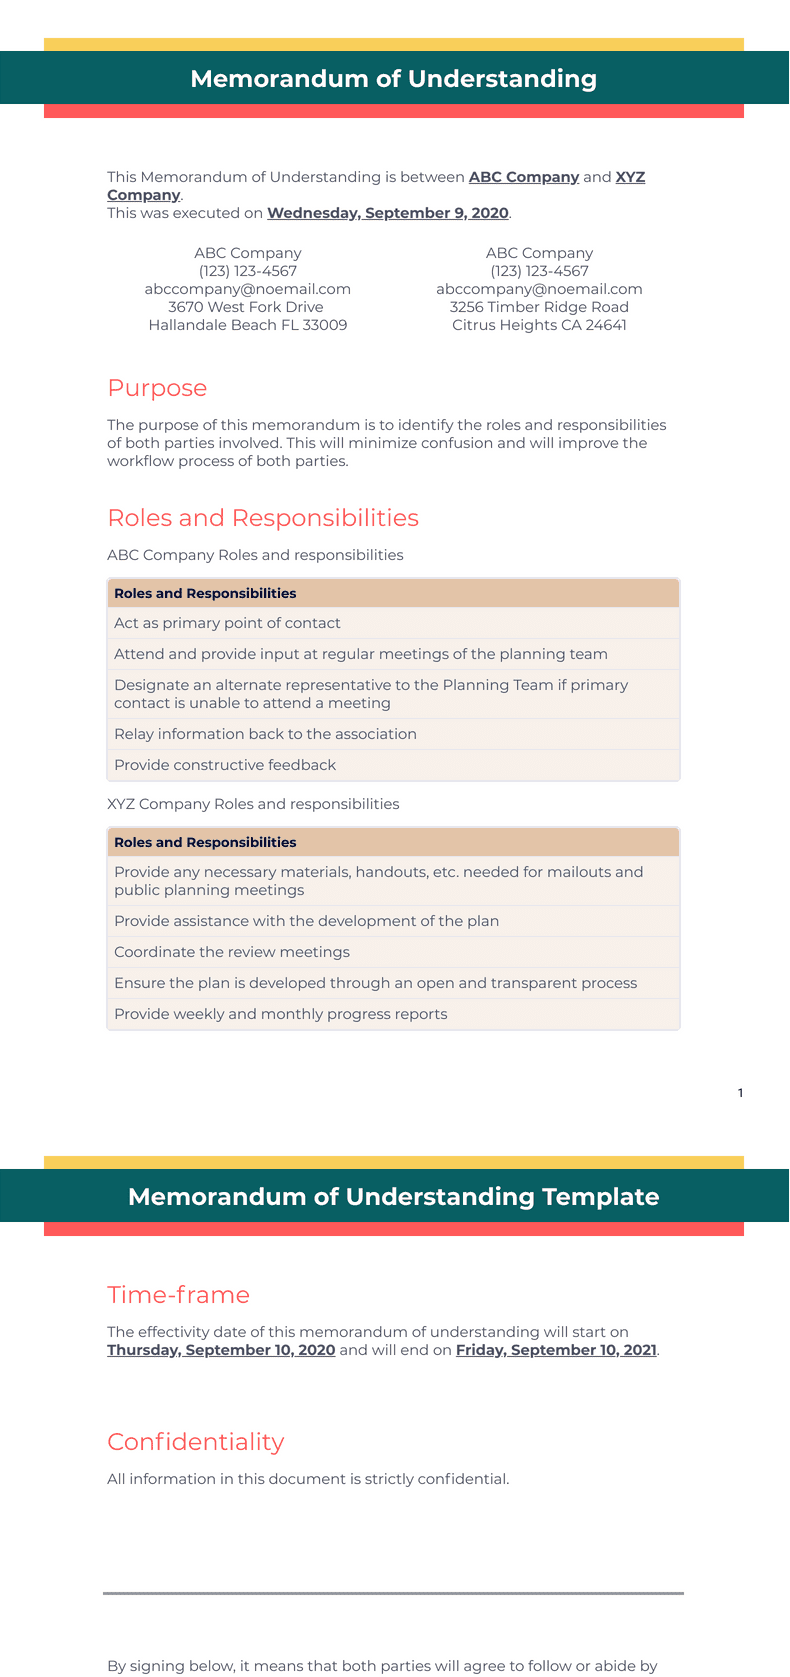 PDF Templates: Memorandum of Understanding Template